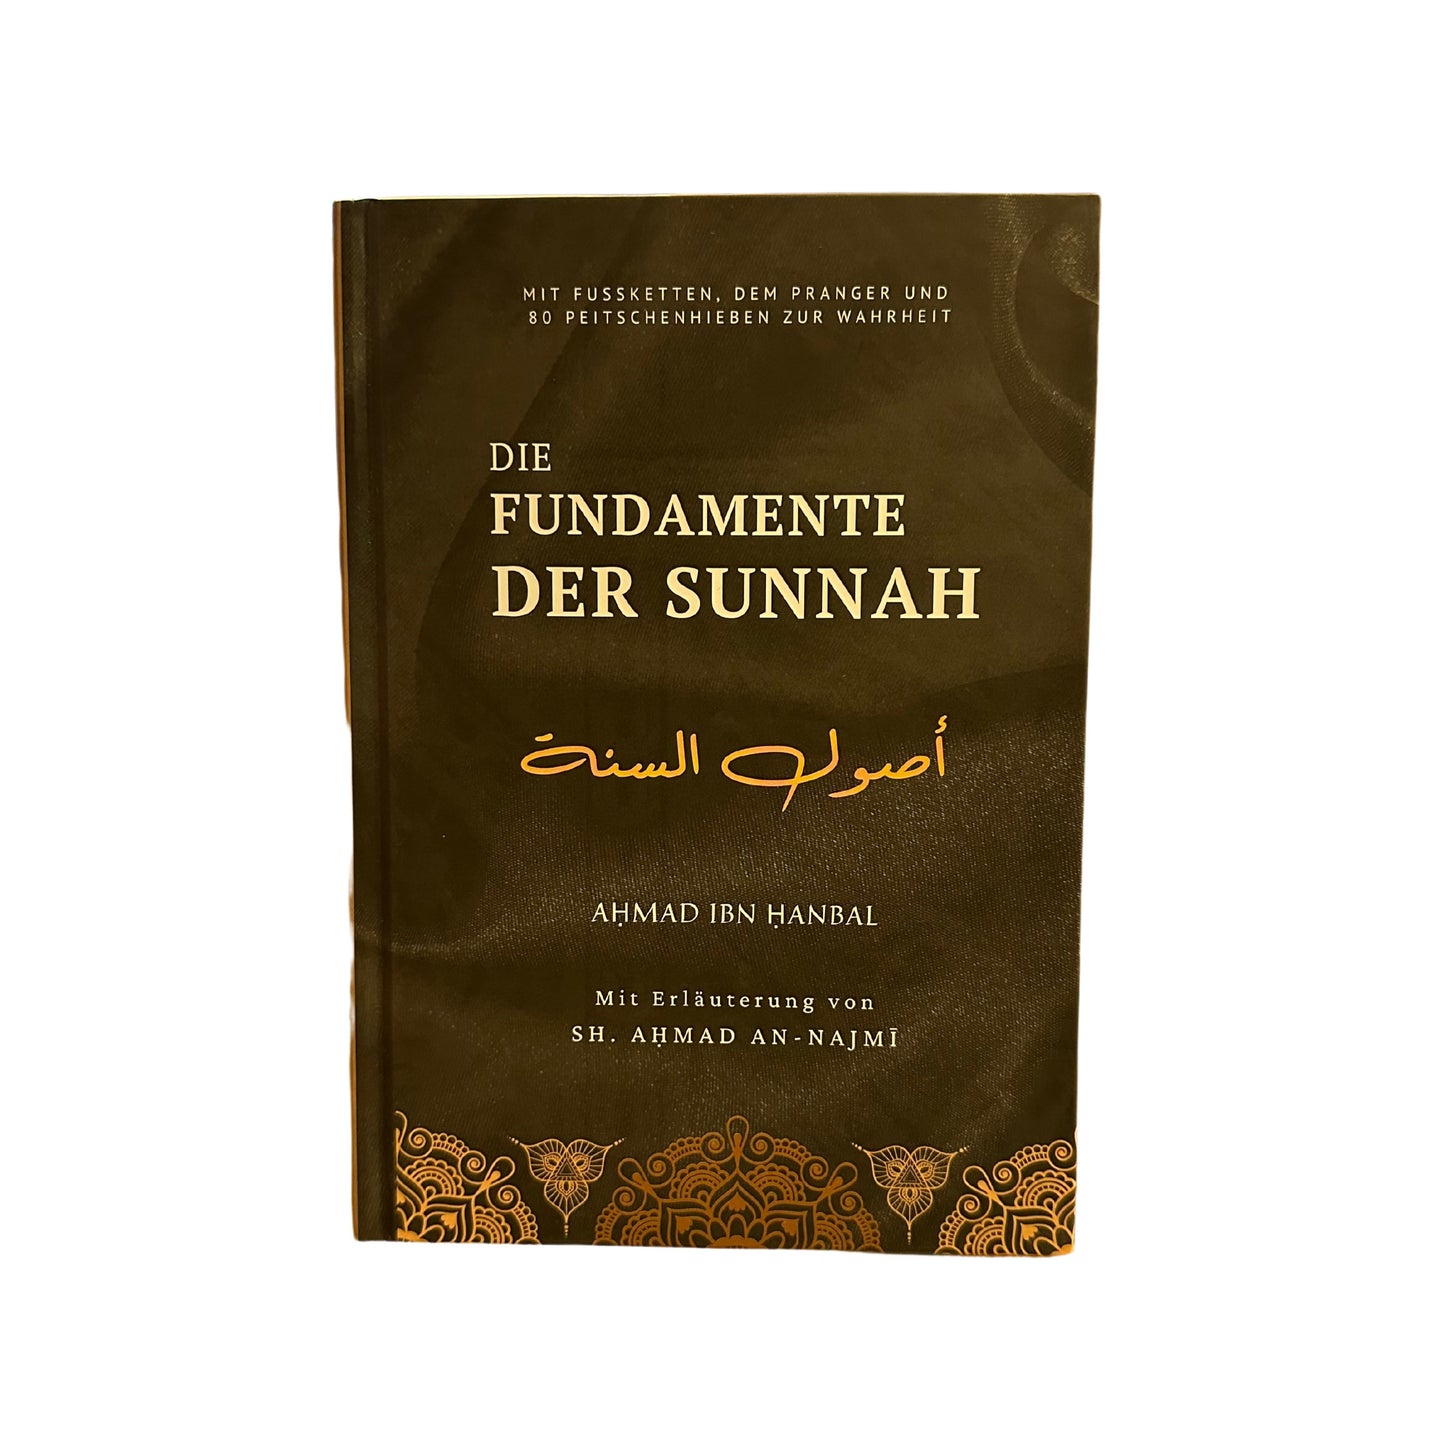 Die Fundamente der Sunnah